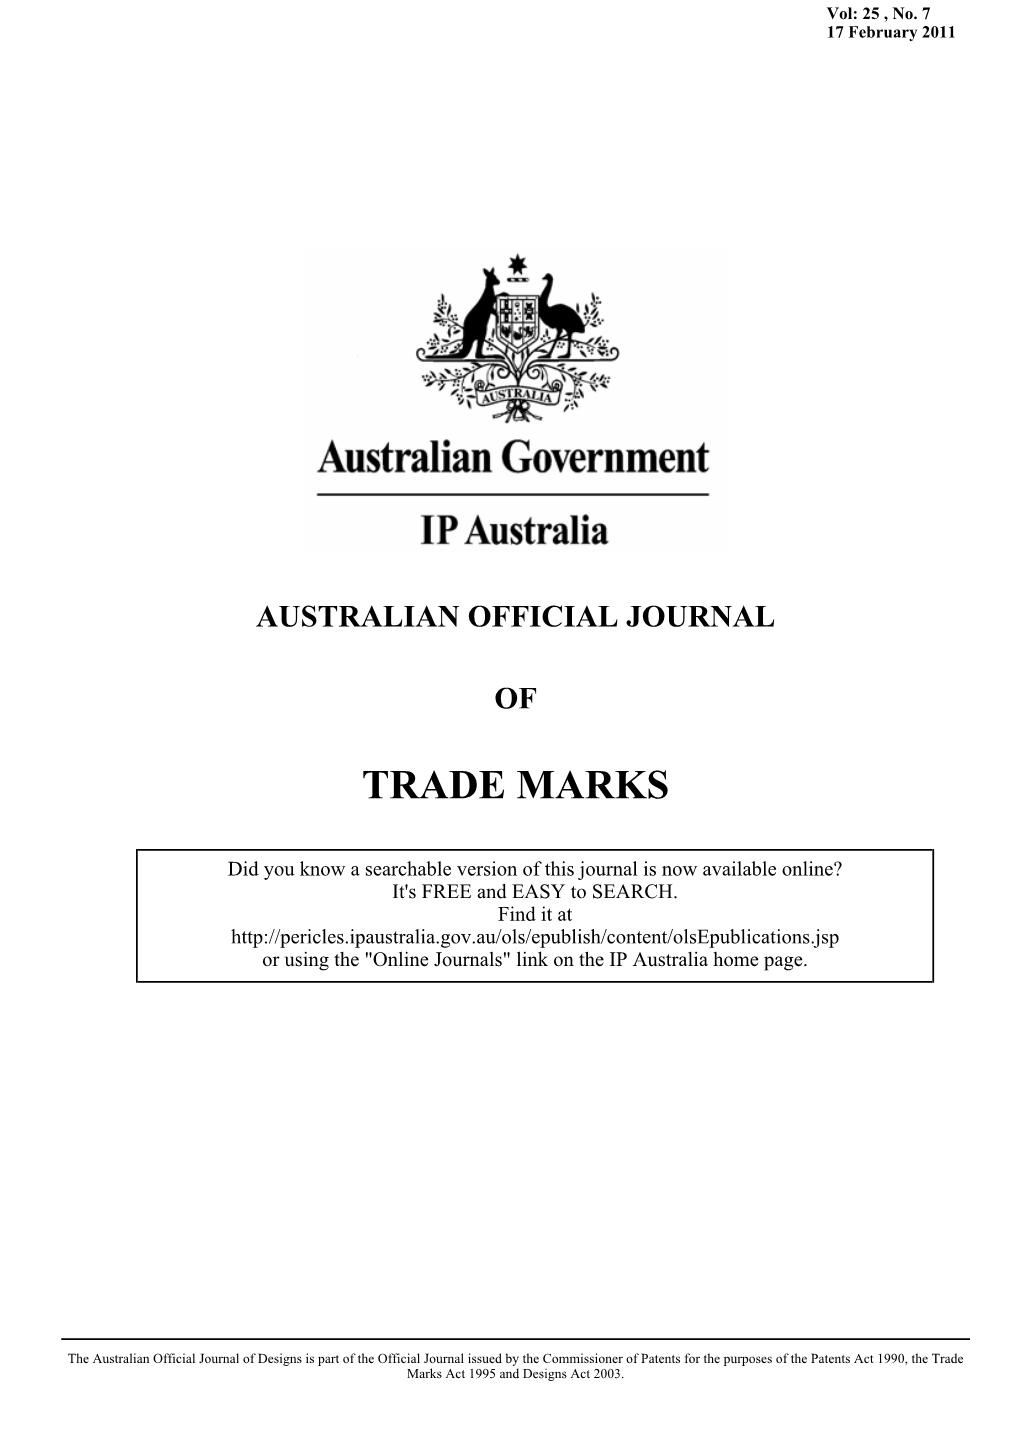 AUSTRALIAN OFFICIAL JOURNAL of TRADE MARKS 17 February 2011